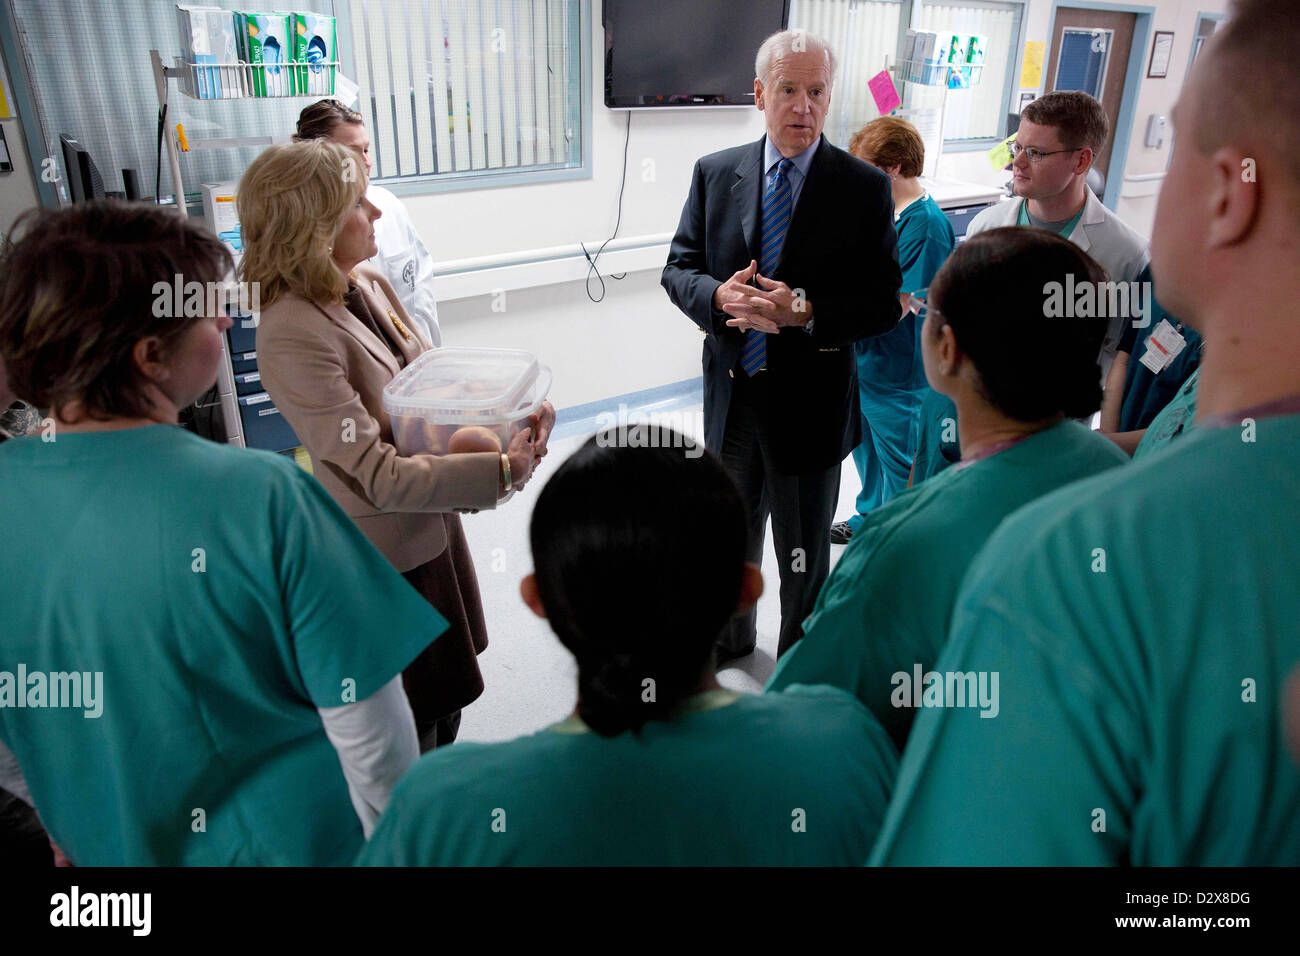 US Vice President Joe Biden and Dr. Jill Biden talk with medical staff during a visit to Landstuhl Regional Medical Center February 3, 2013 in Landstuhl, Germany. Stock Photo